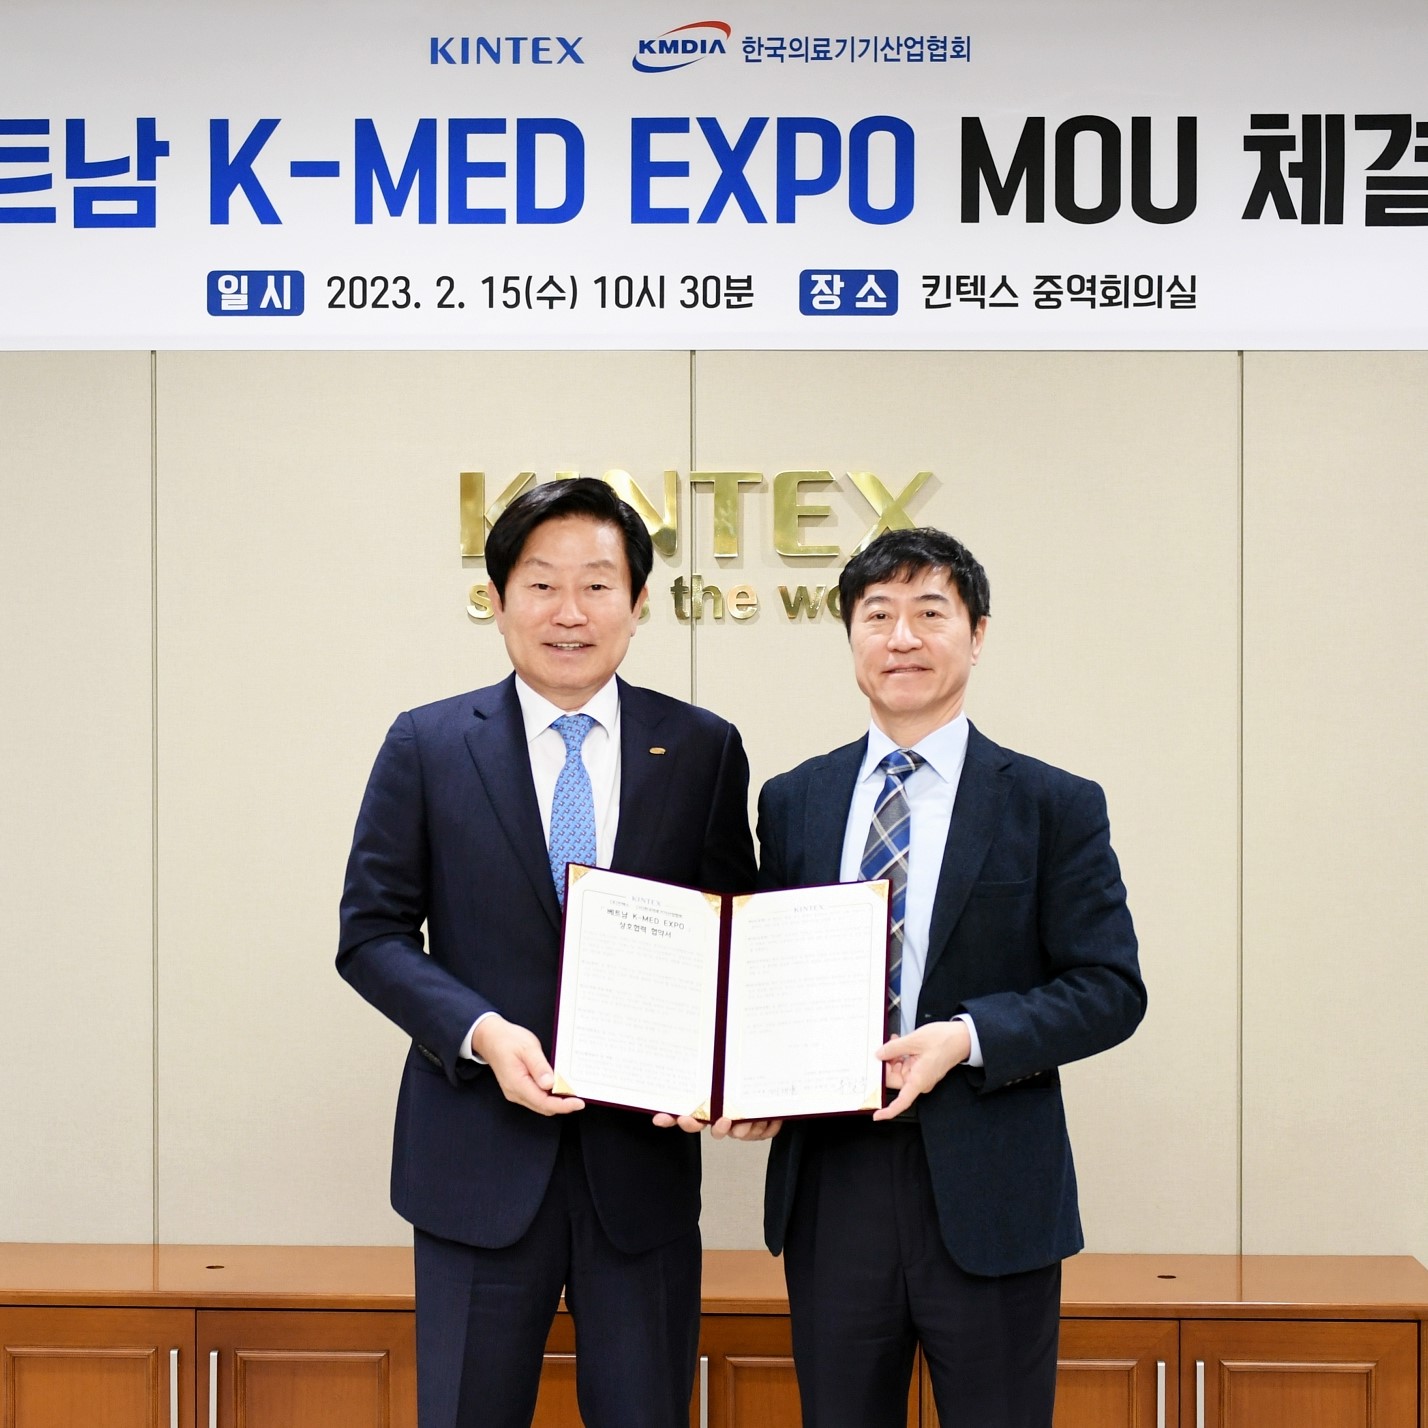 [KINTEX 이미지] 킨텍스 - 한국의료기기산업협회 ‘베트남 K-MED EXPO’성공 개최를 위한 업무협약 체결 (1)_썸네일.JPG